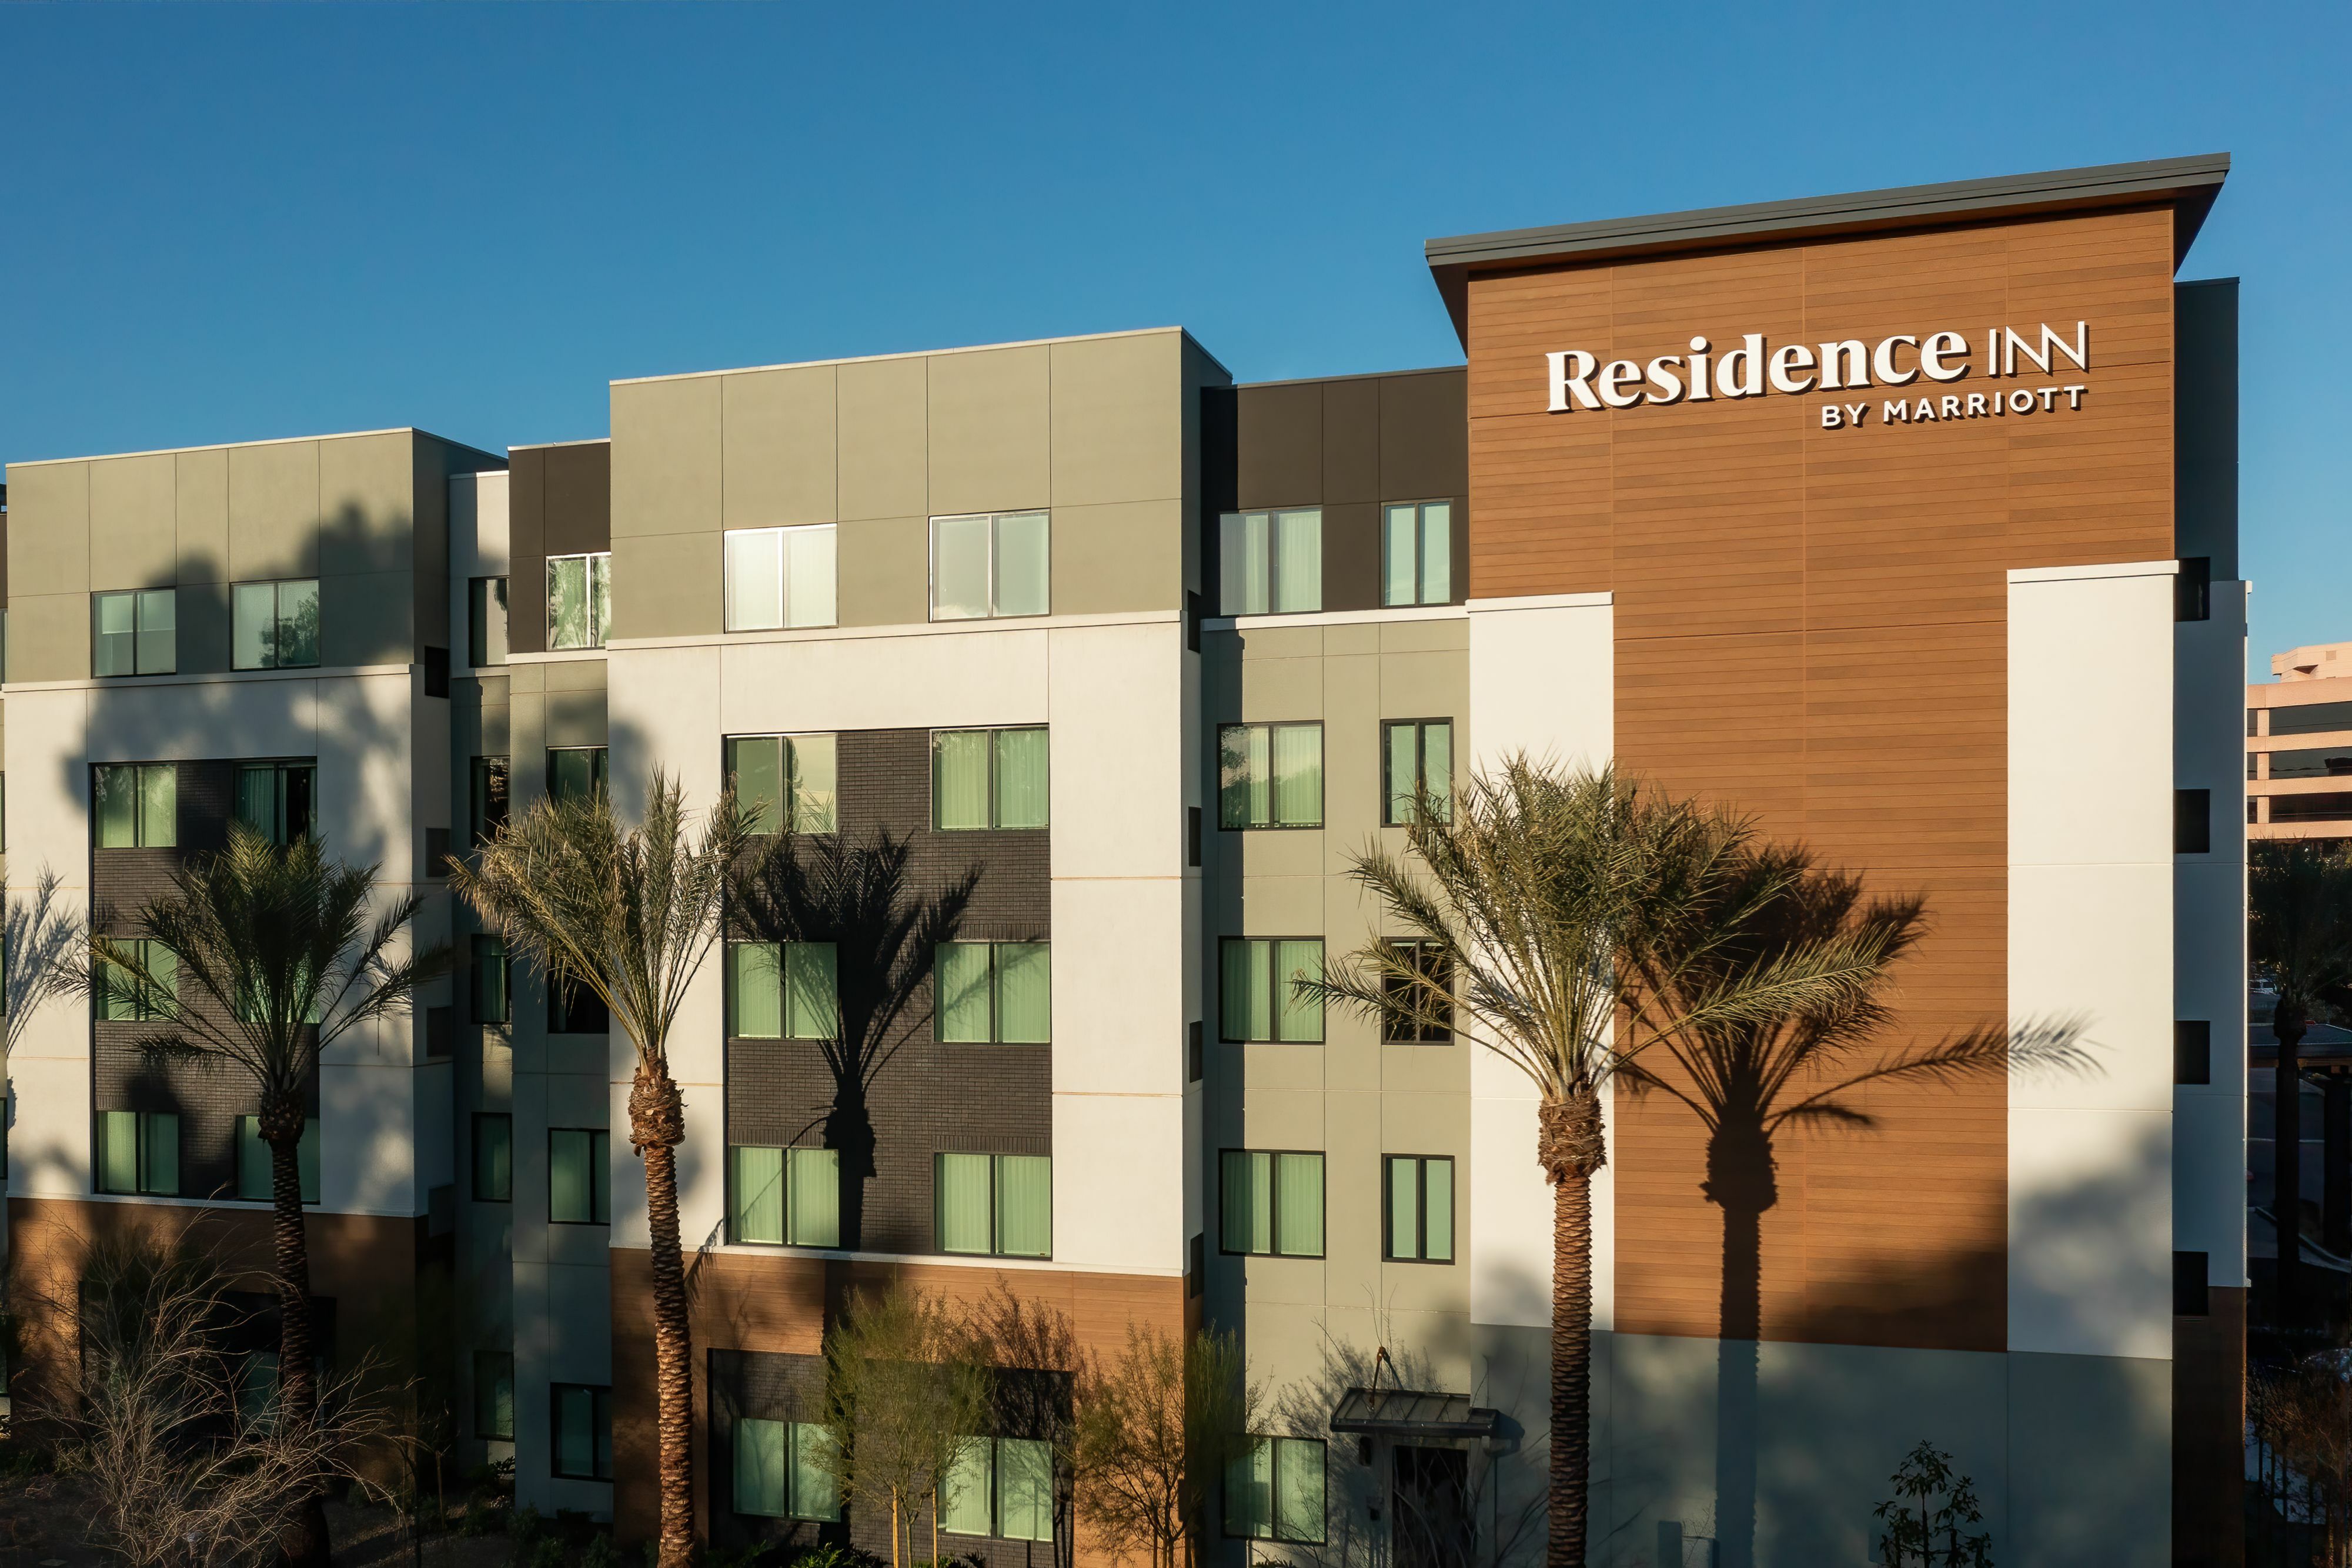 Photo of Residence Inn Anaheim Brea, Brea, CA